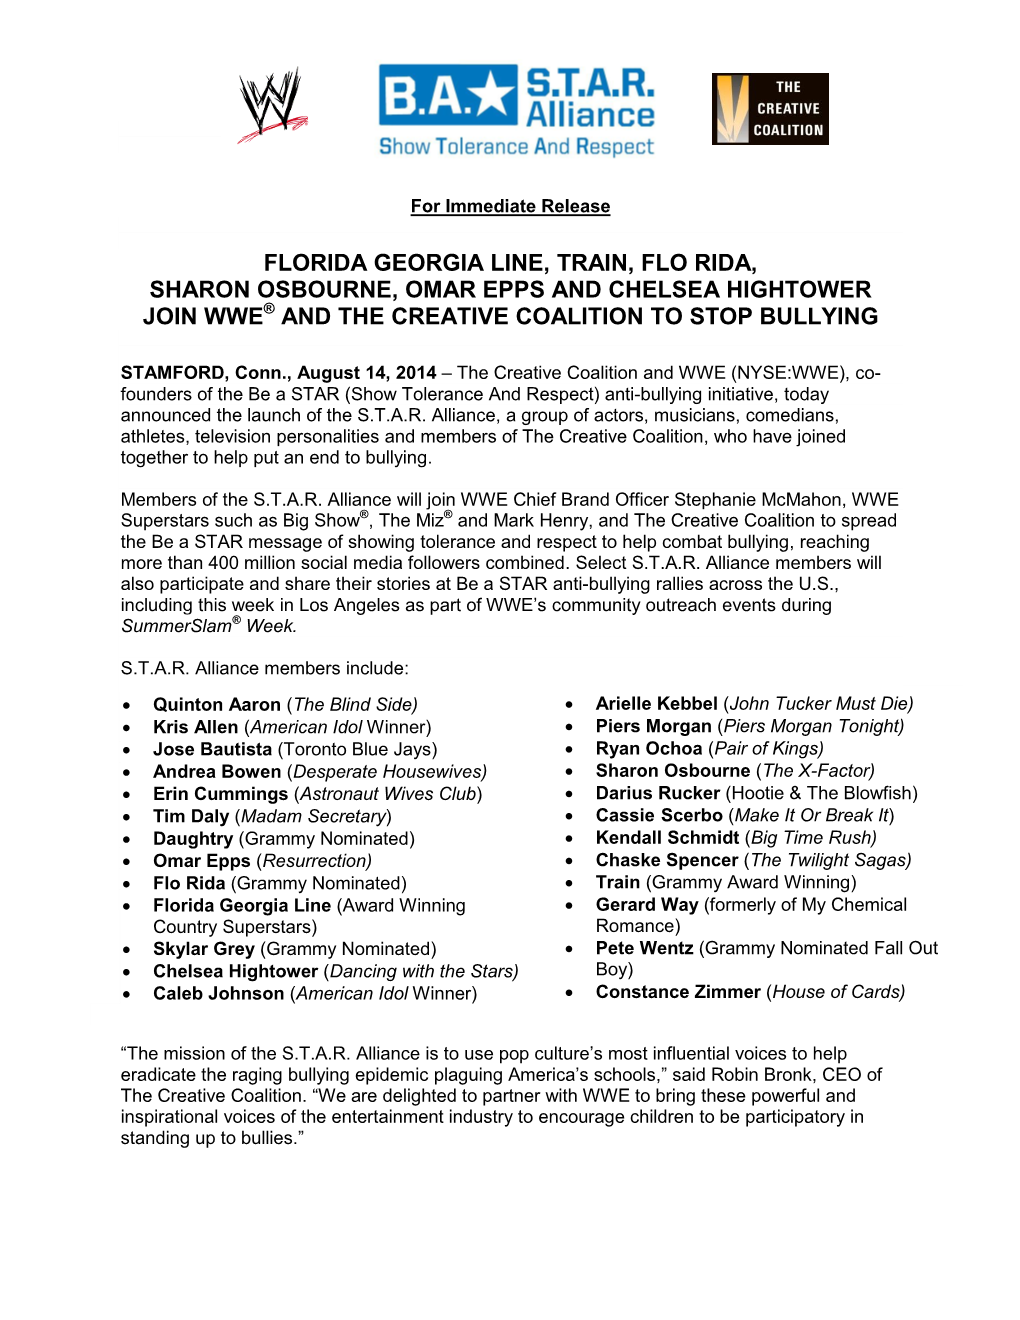 Florida Georgia Line, Train, Flo Rida, Sharon Osbourne, Omar Epps and Chelsea Hightower Join Wwe® and the Creative Coalition to Stop Bullying